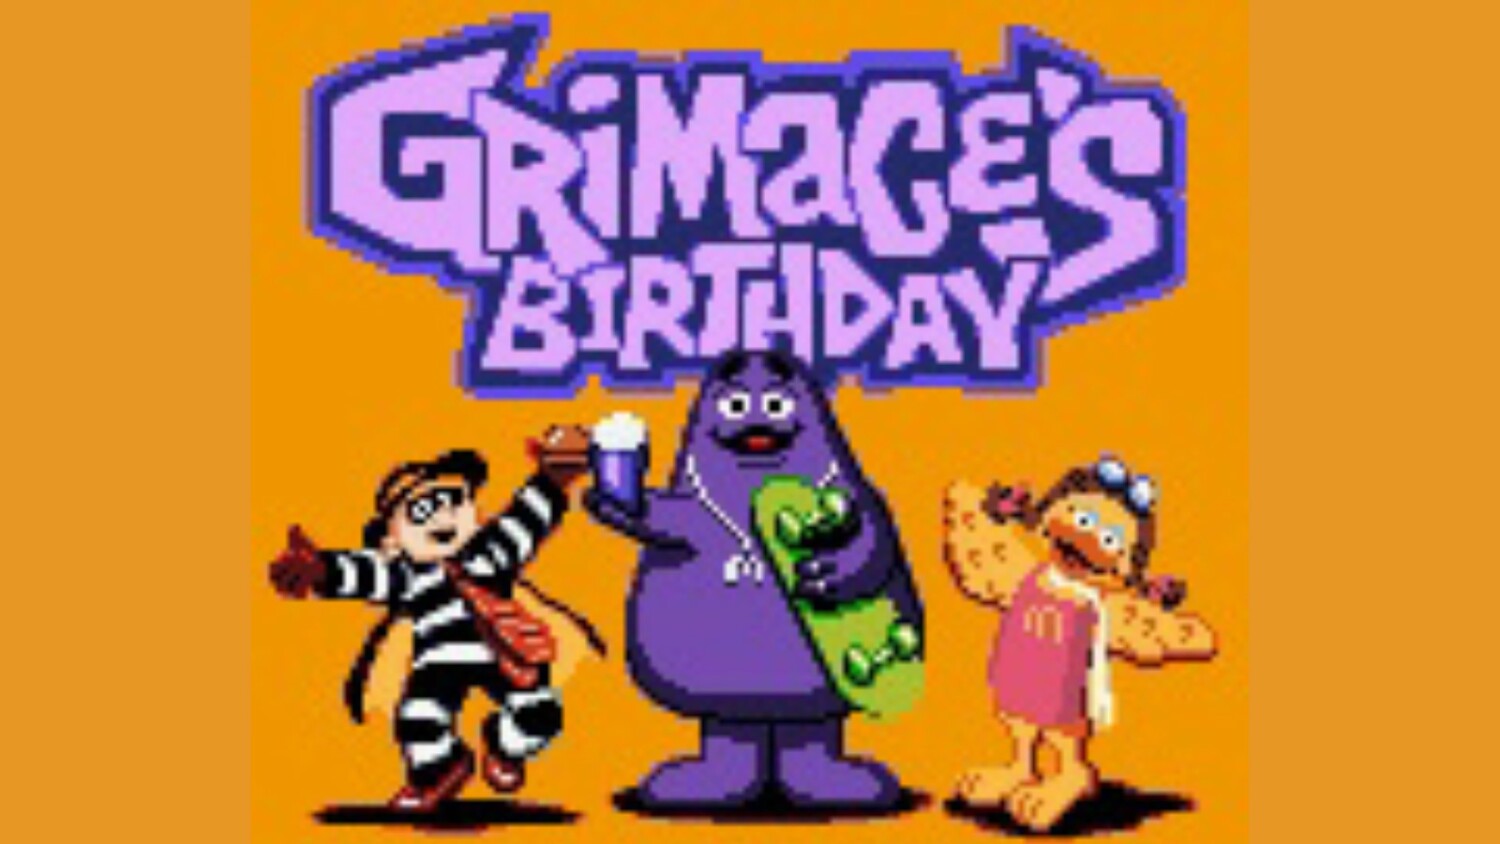 Grimace’s Birthday NintendoSoup